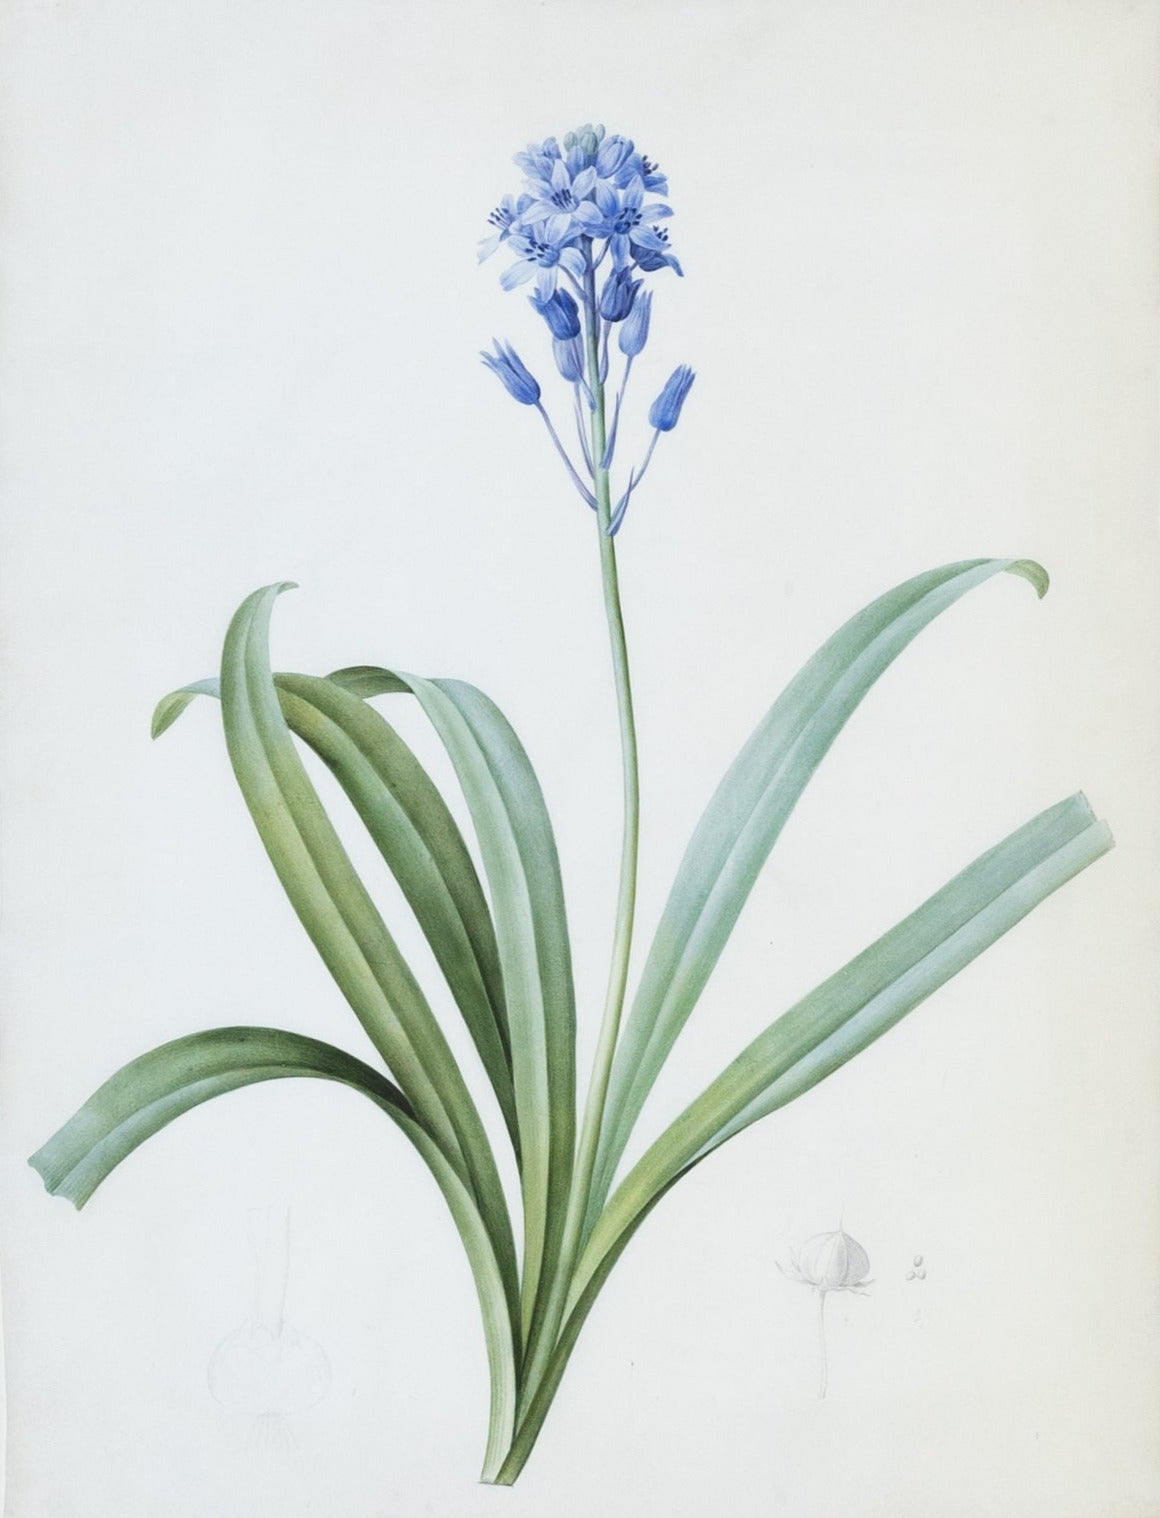 Redouté, Pierre-Joseph. "Italian Bluebell". Prepared for Les Liliacées, ca. 1802-1816.